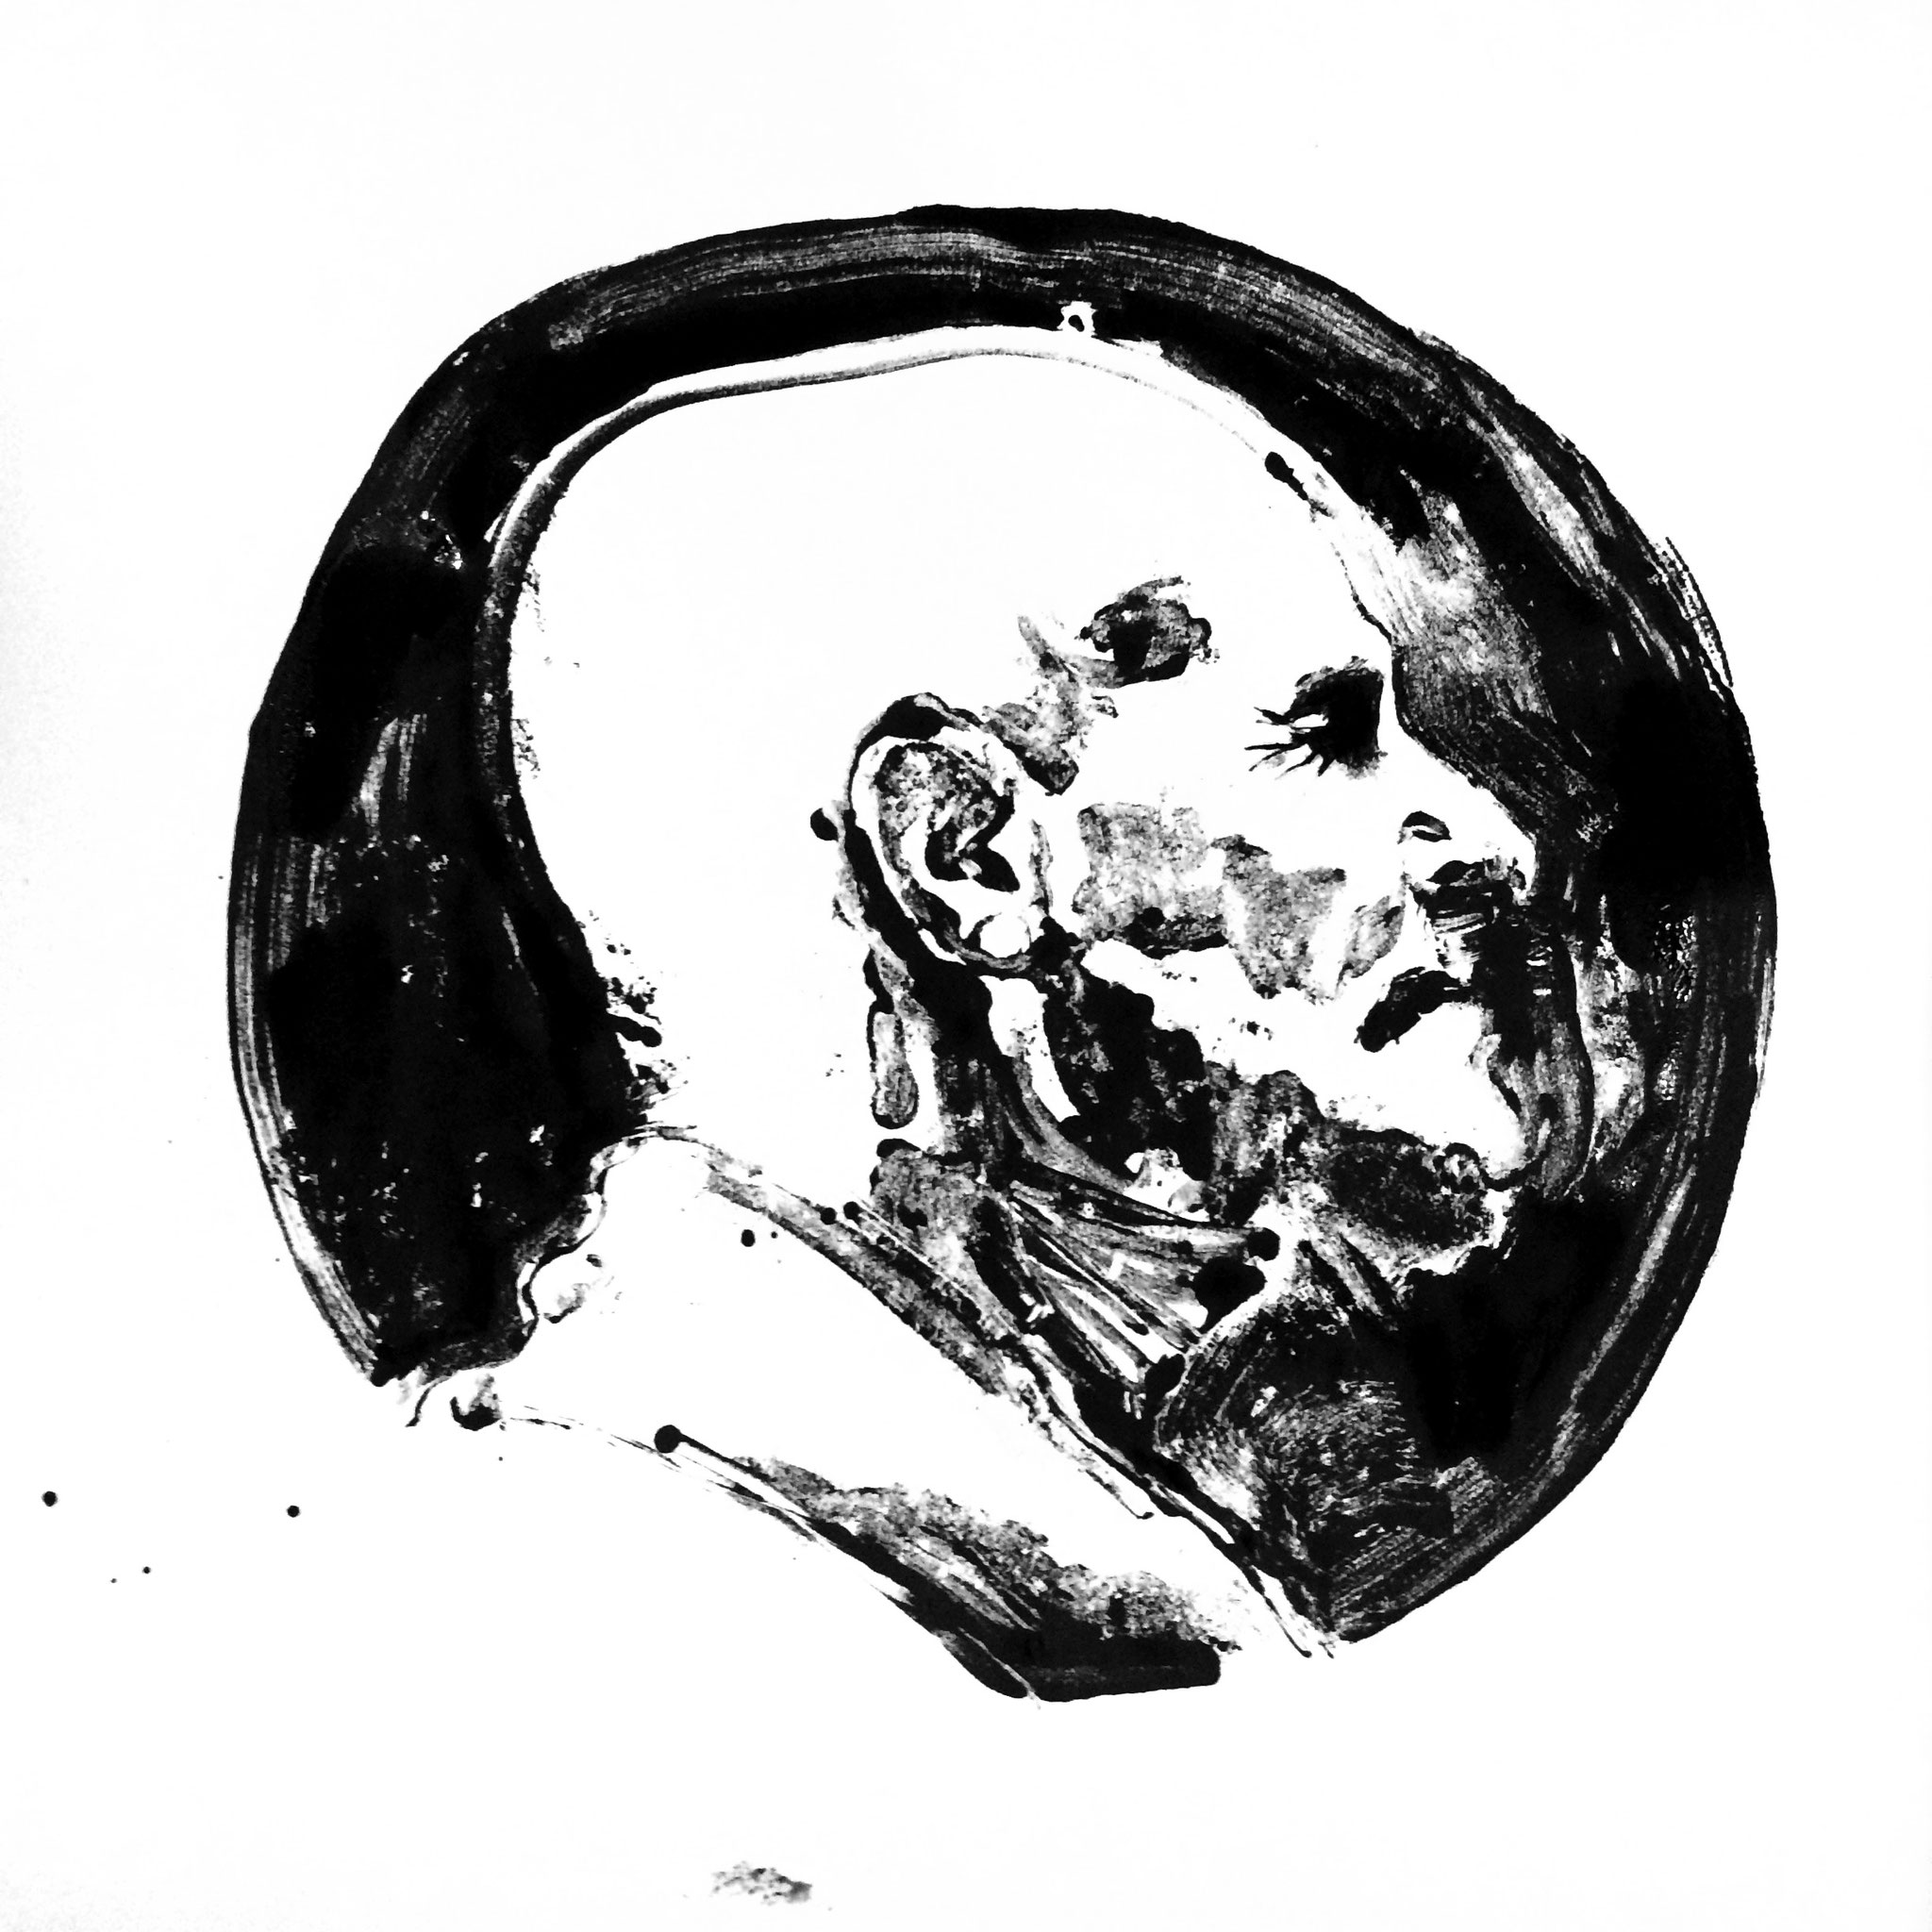 Elyseum, 80 x 80 cm, Ink on paper